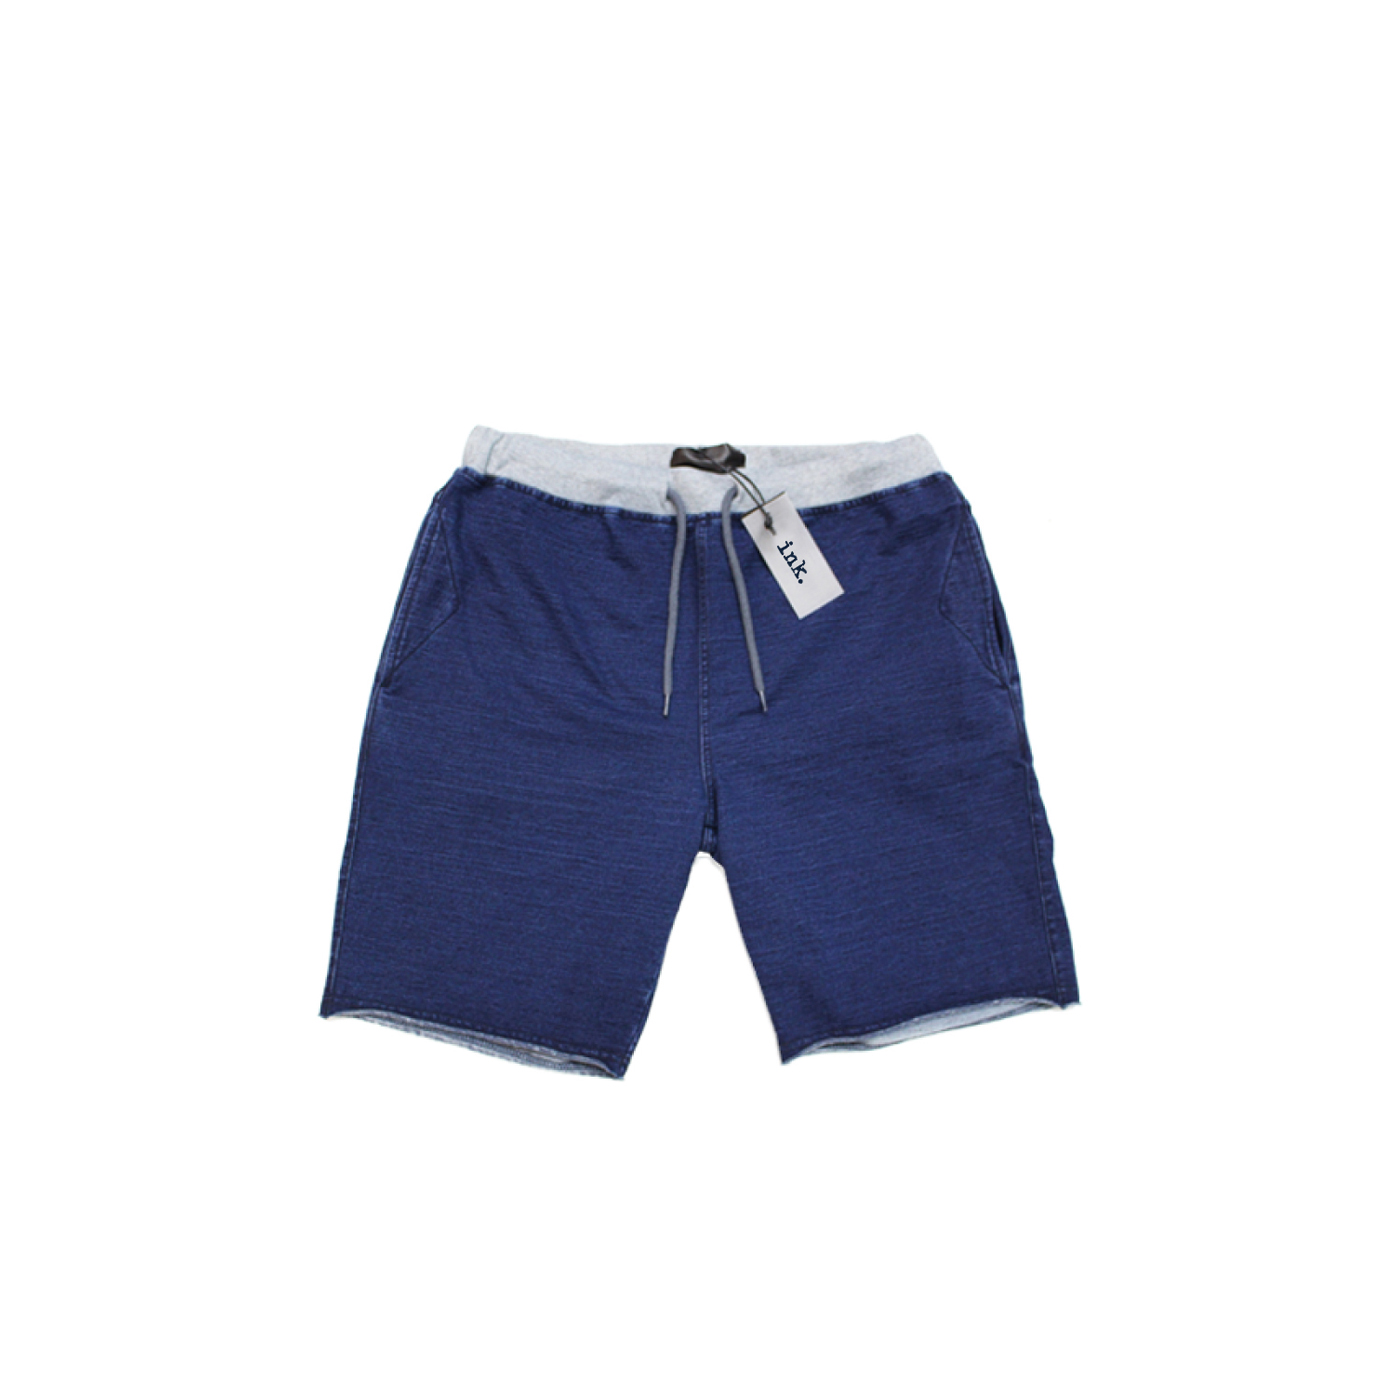 Klein-indigo-sweat-shorts-copy